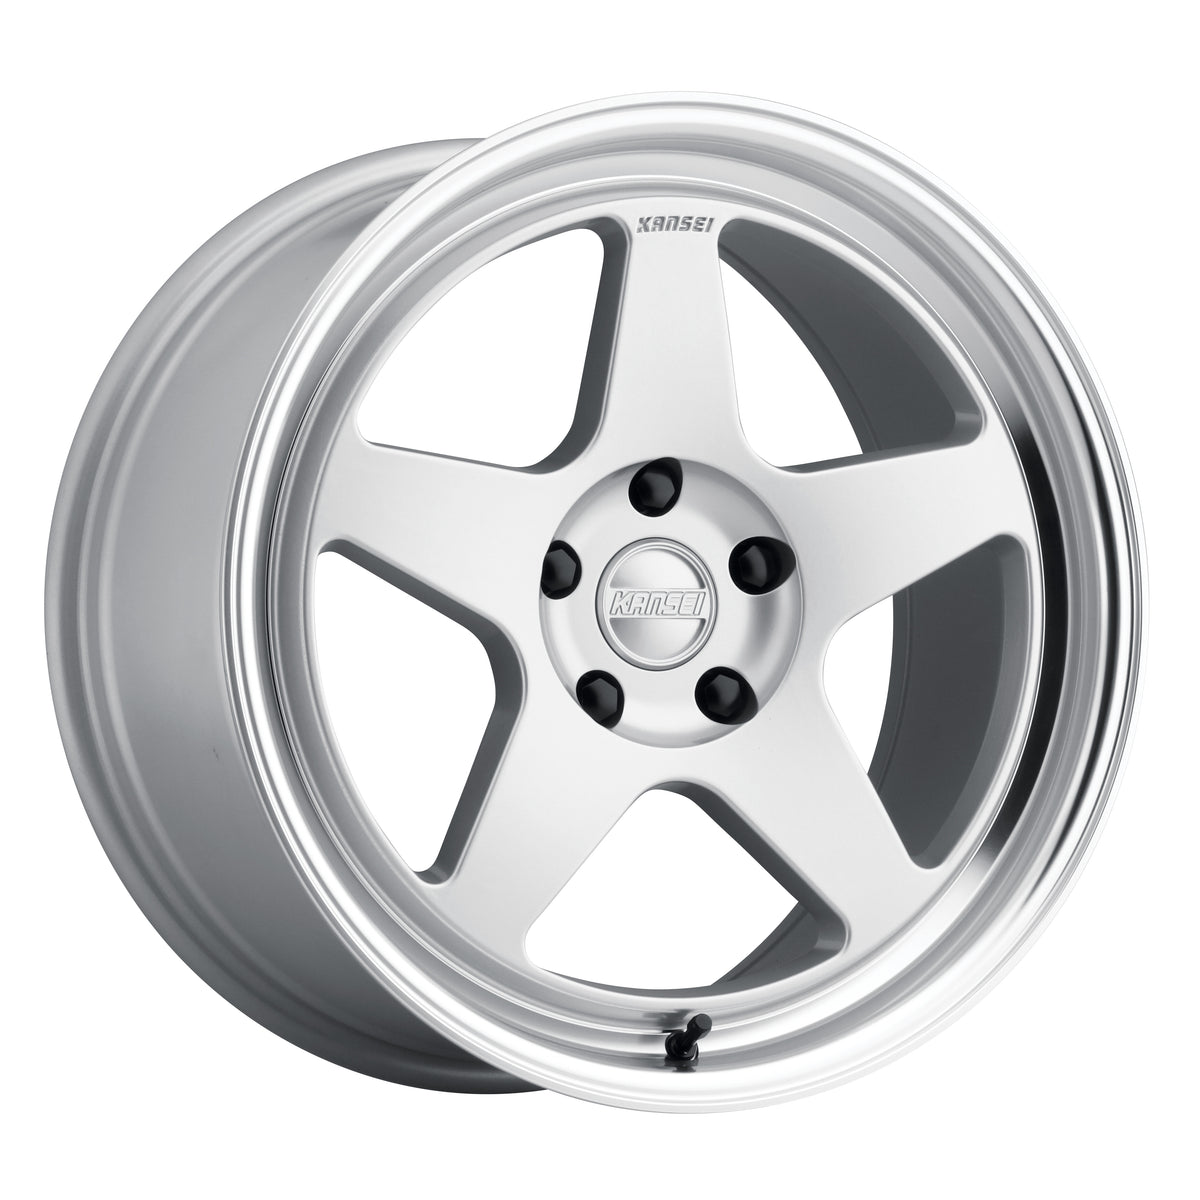 K12H KNP Wheel, Size: 18" x 8.50", Bolt Pattern: 5 x 120 mm, Backspace: 6.13" [Finish: Hyper Silver]